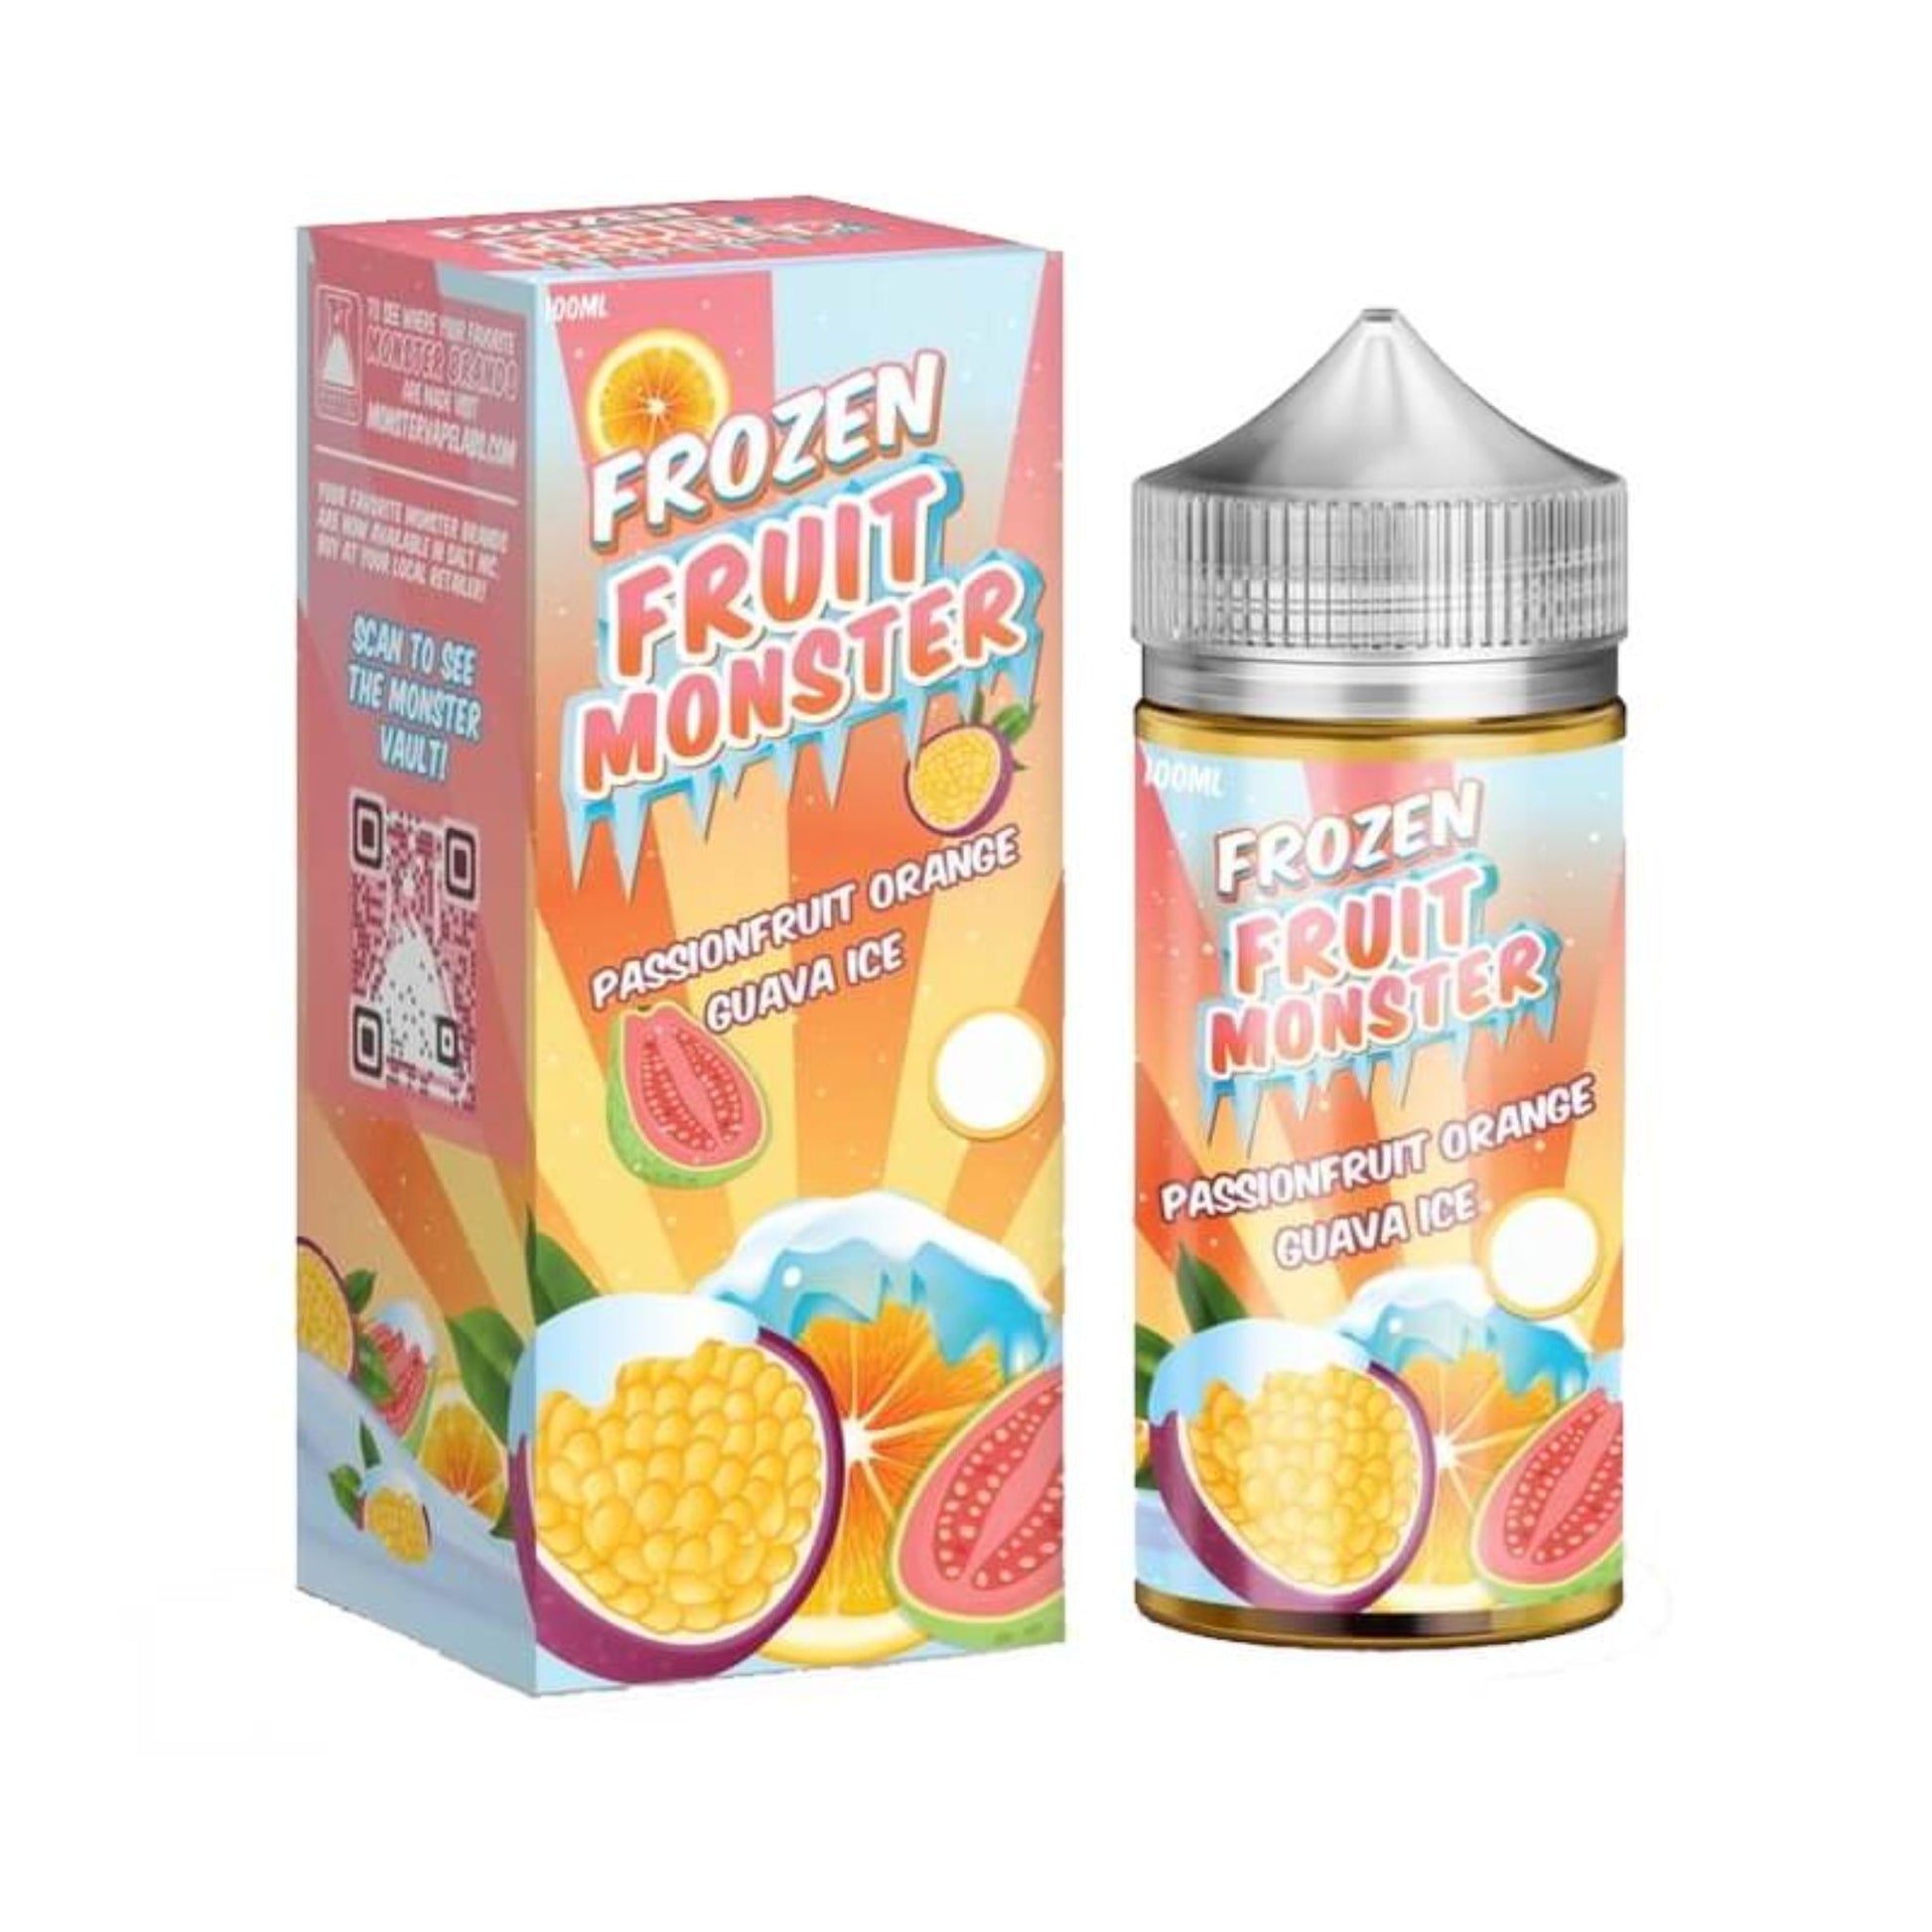 Frozen Fruit Monster | Passionfruit Orange Guava Ice 100ml bottle and box